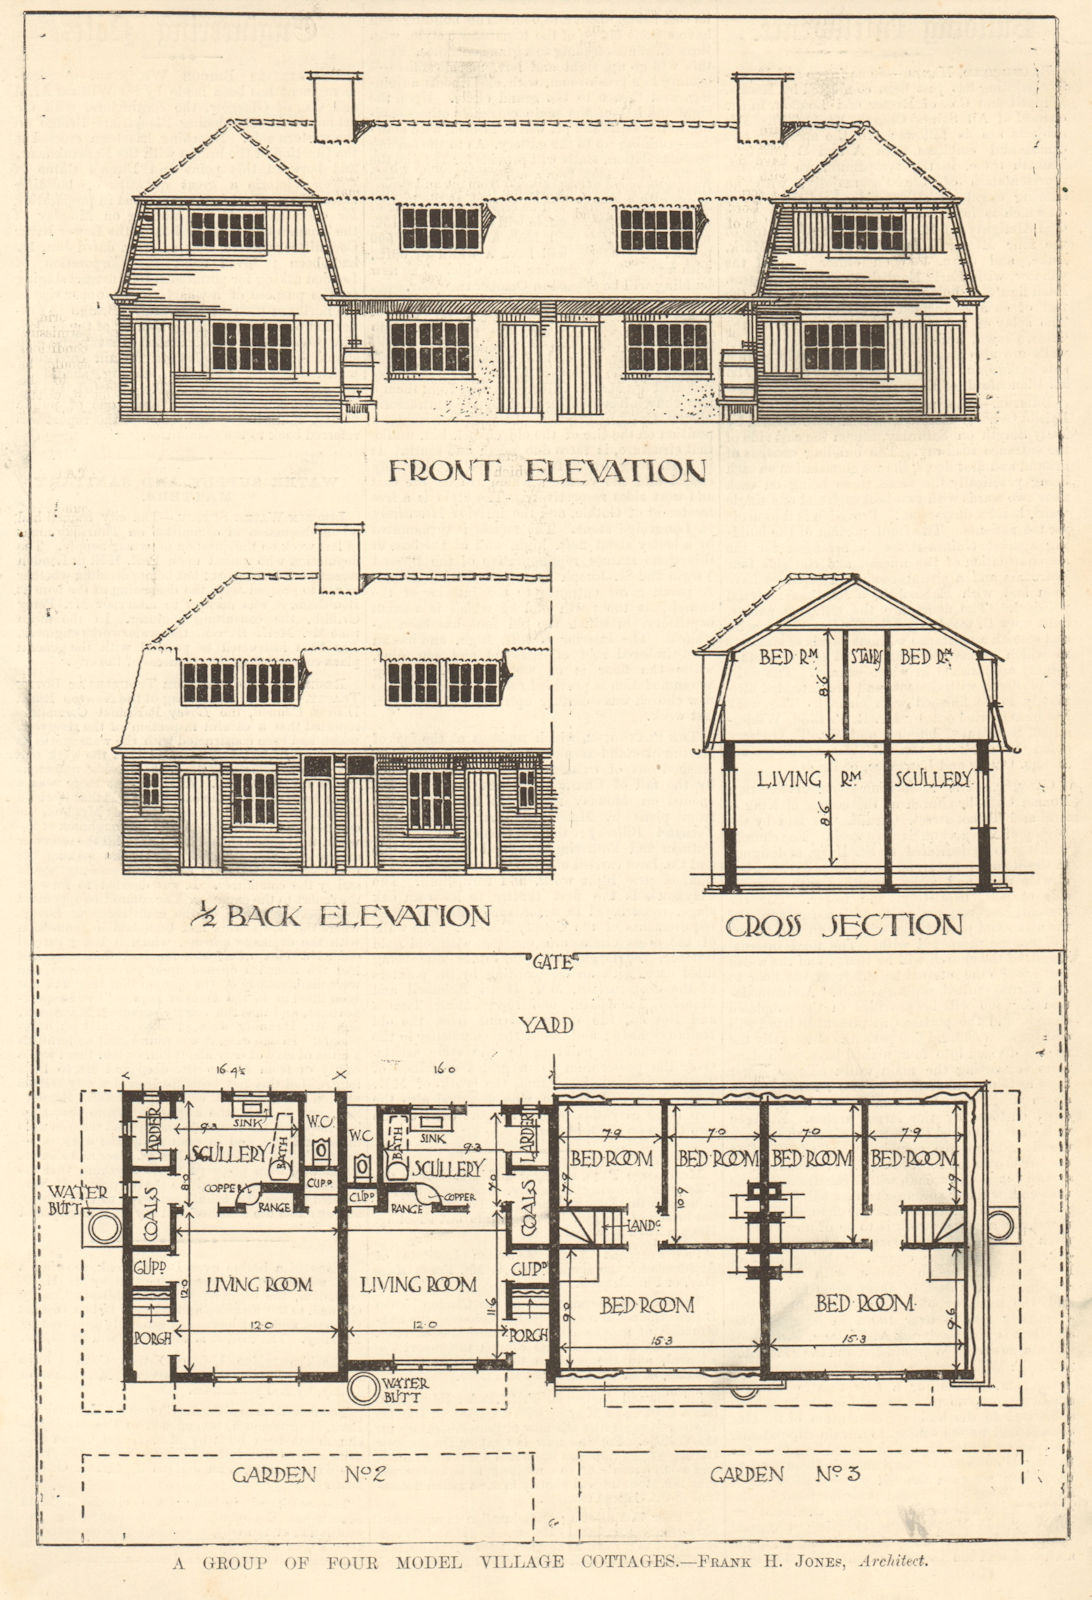 Associate Product Model village cottages. Frank H. Jones, Architect. Elevation section plan 1907